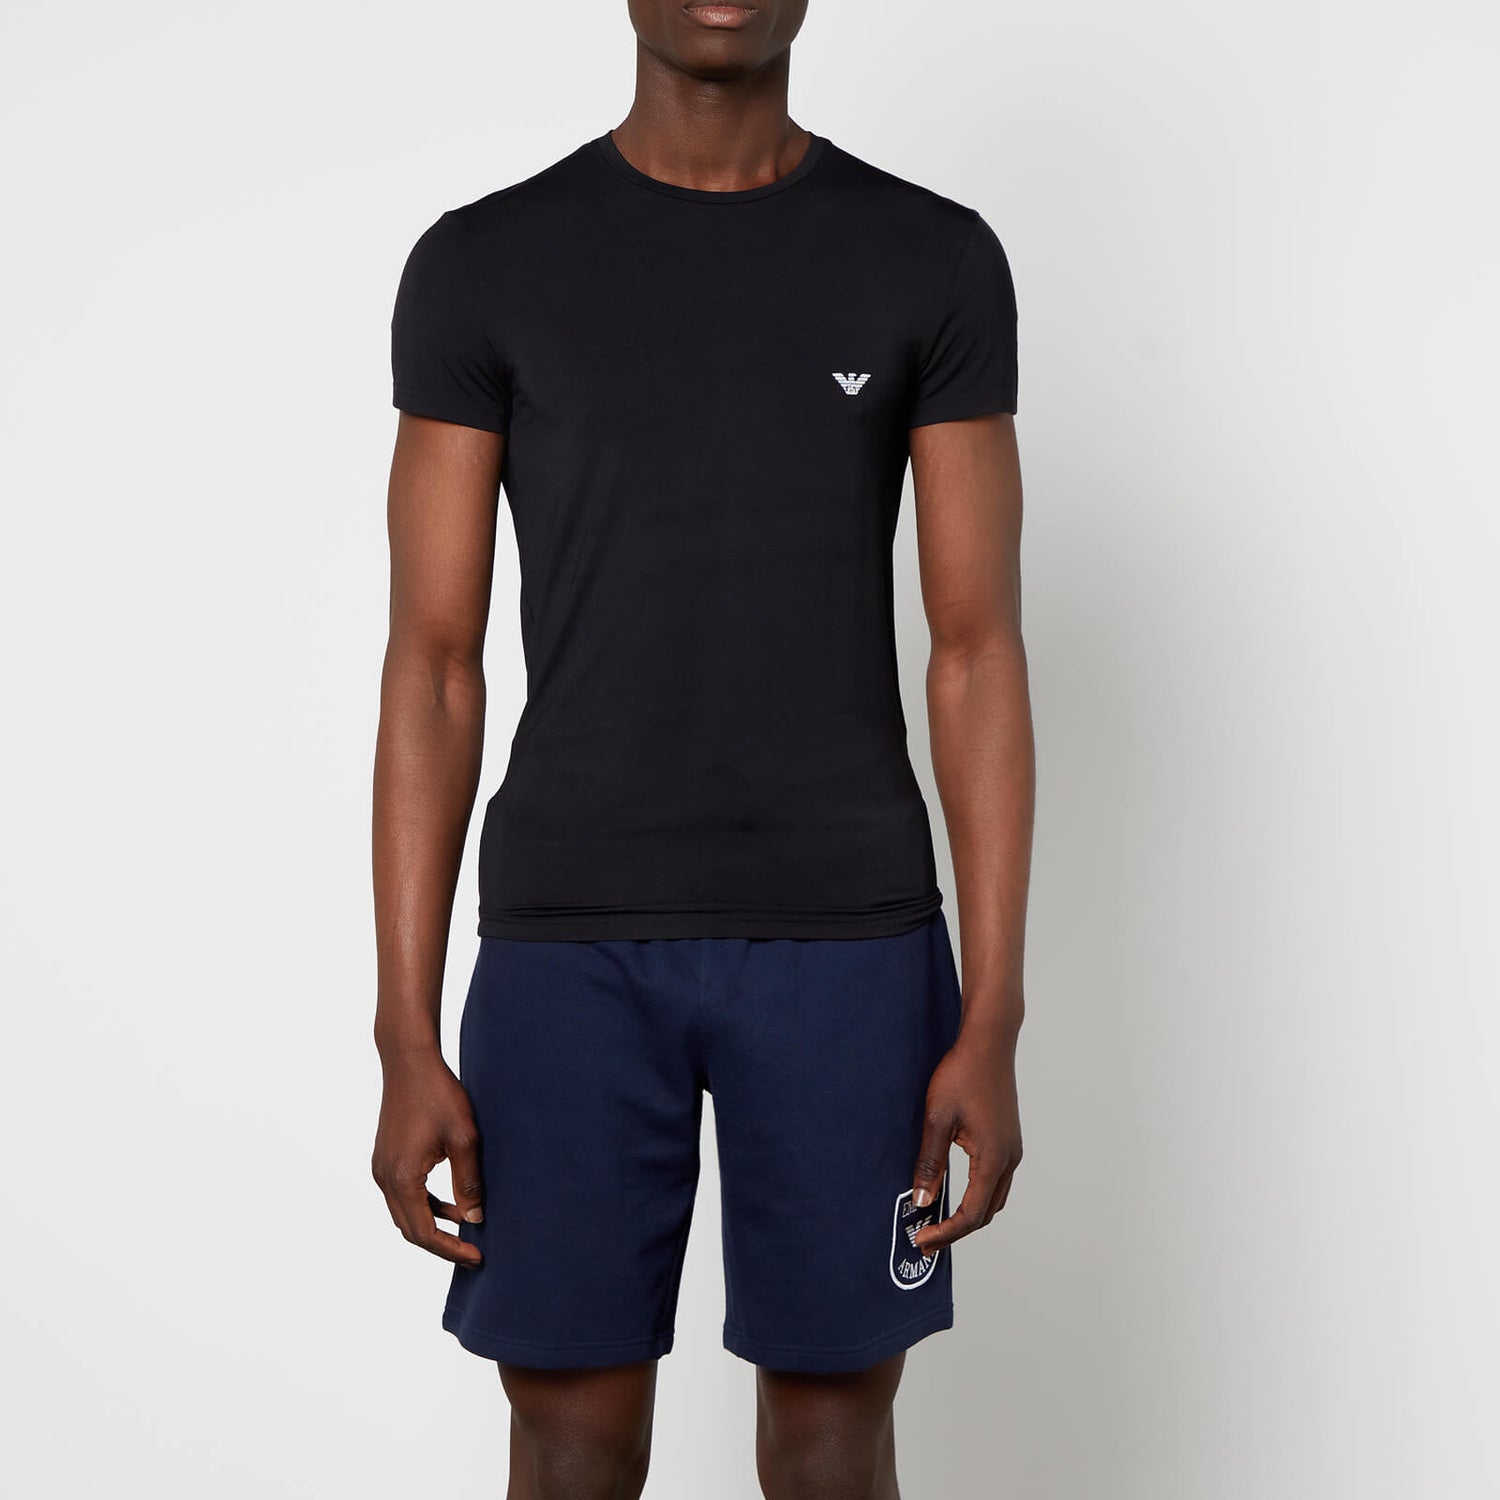 Emporio Armani Men's Soft Modal T-Shirt - Black - S